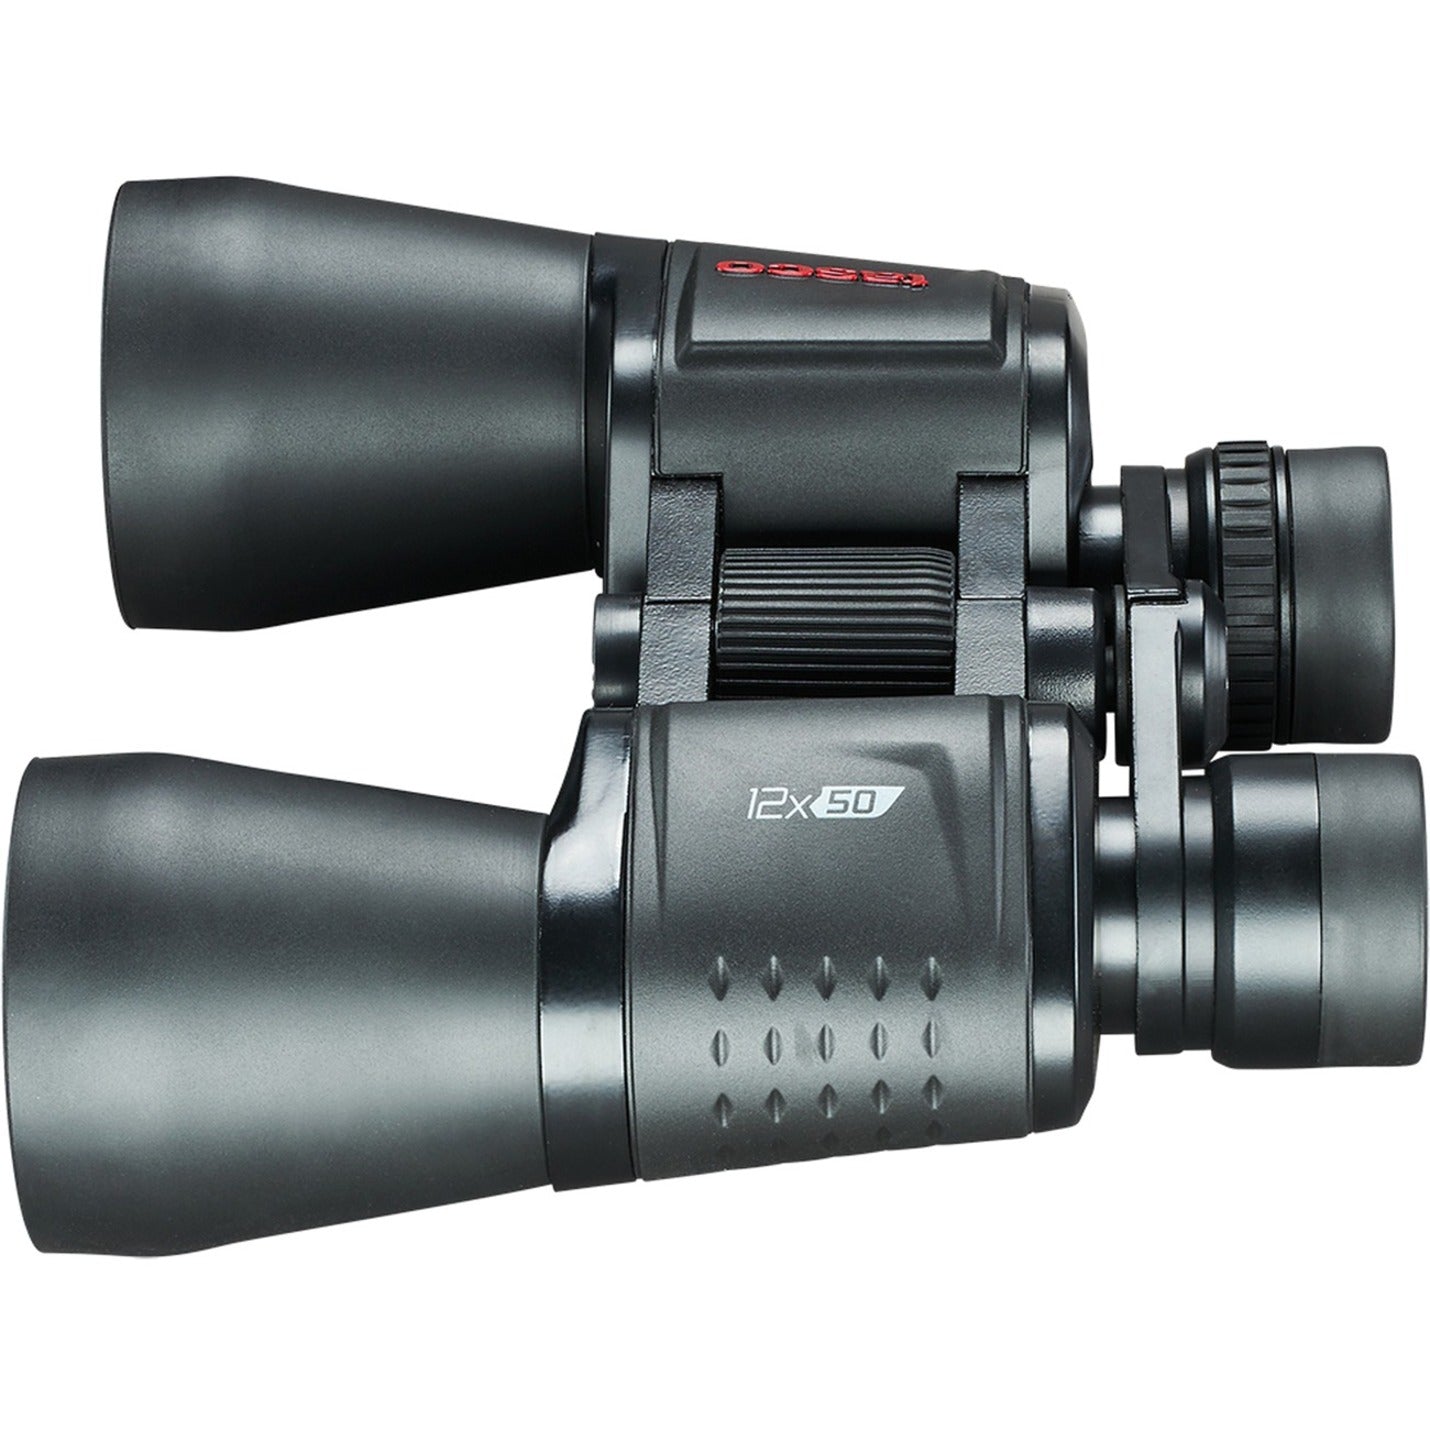 Tasco 170125 Essentials 12x 50mm Porro Prism Binoculars, Weather Resistant, Lifetime Warranty